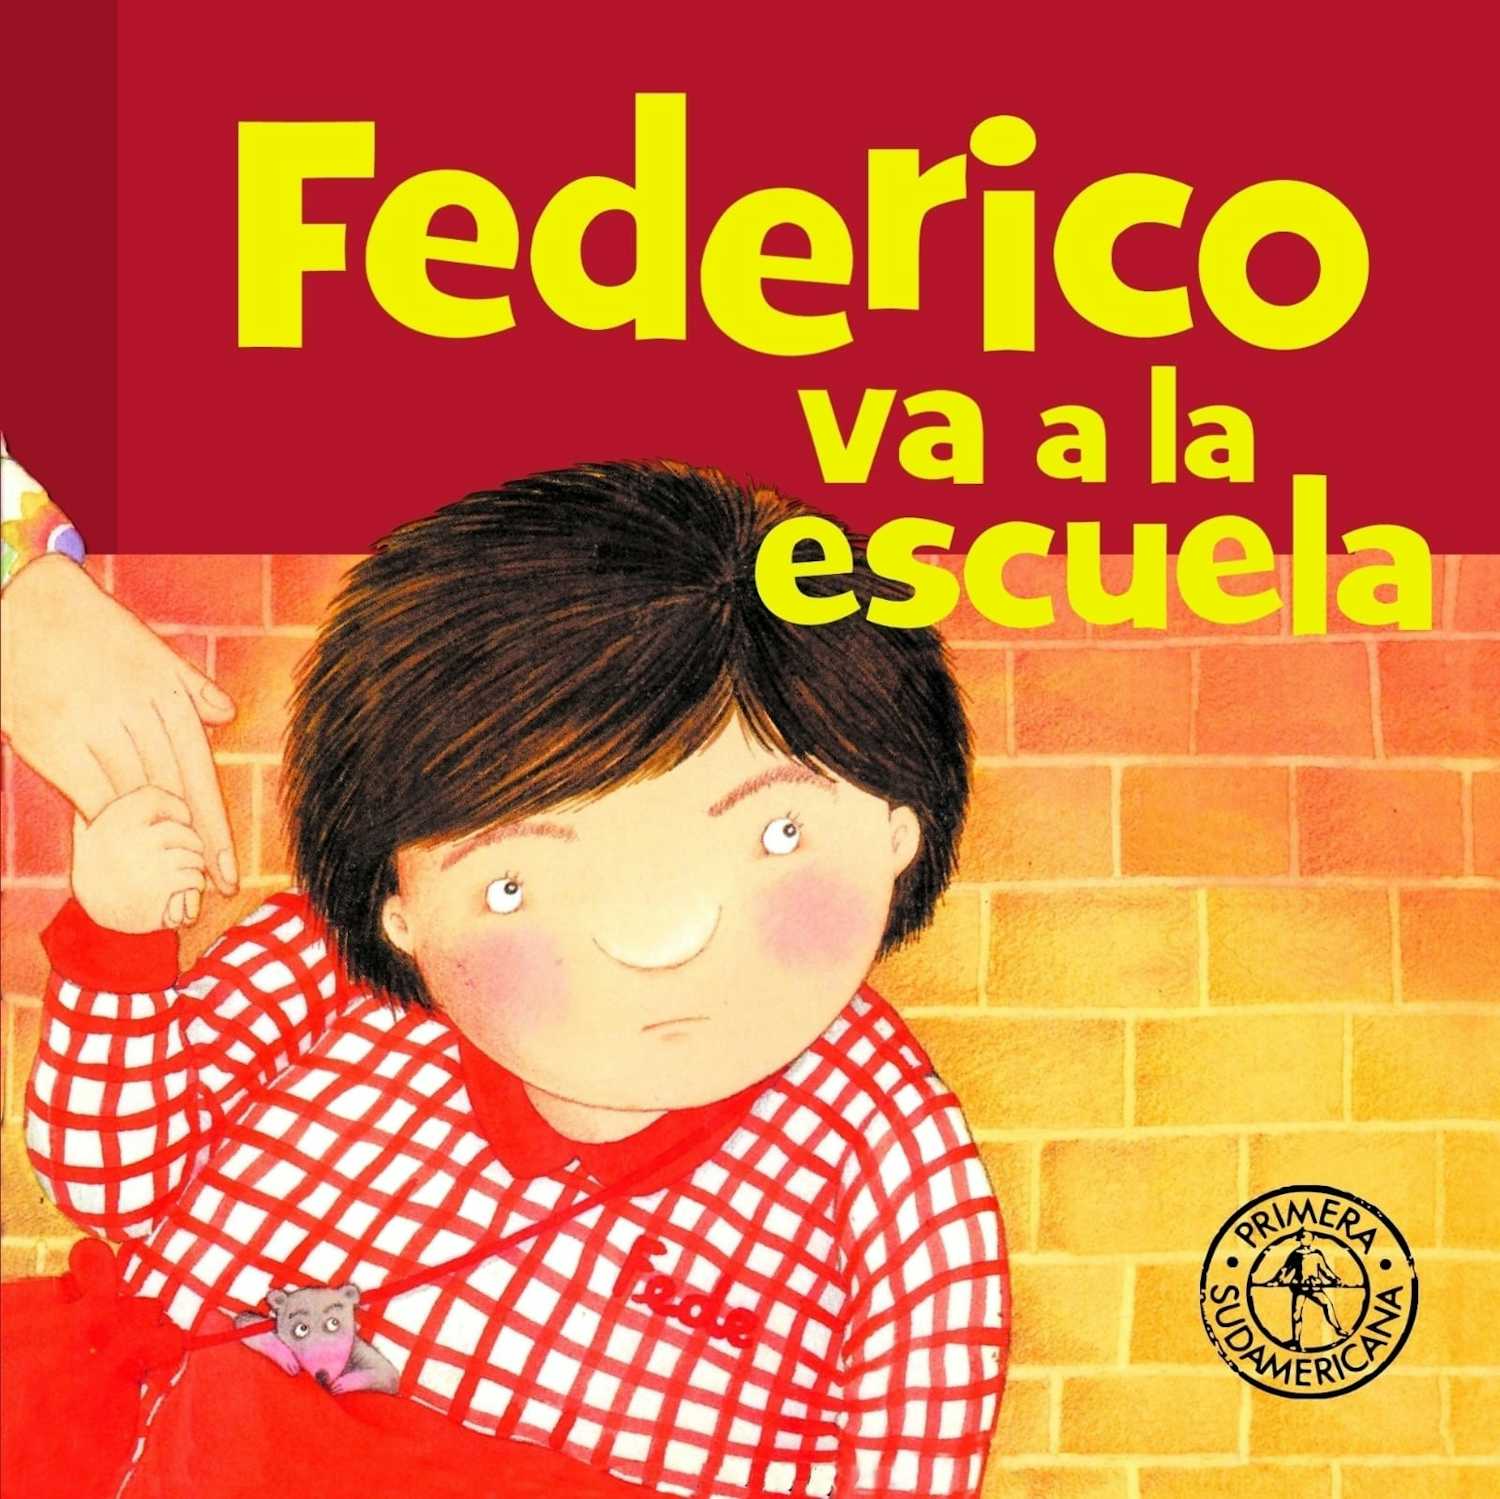 Federico va a la escuela, de Graciela Montes.